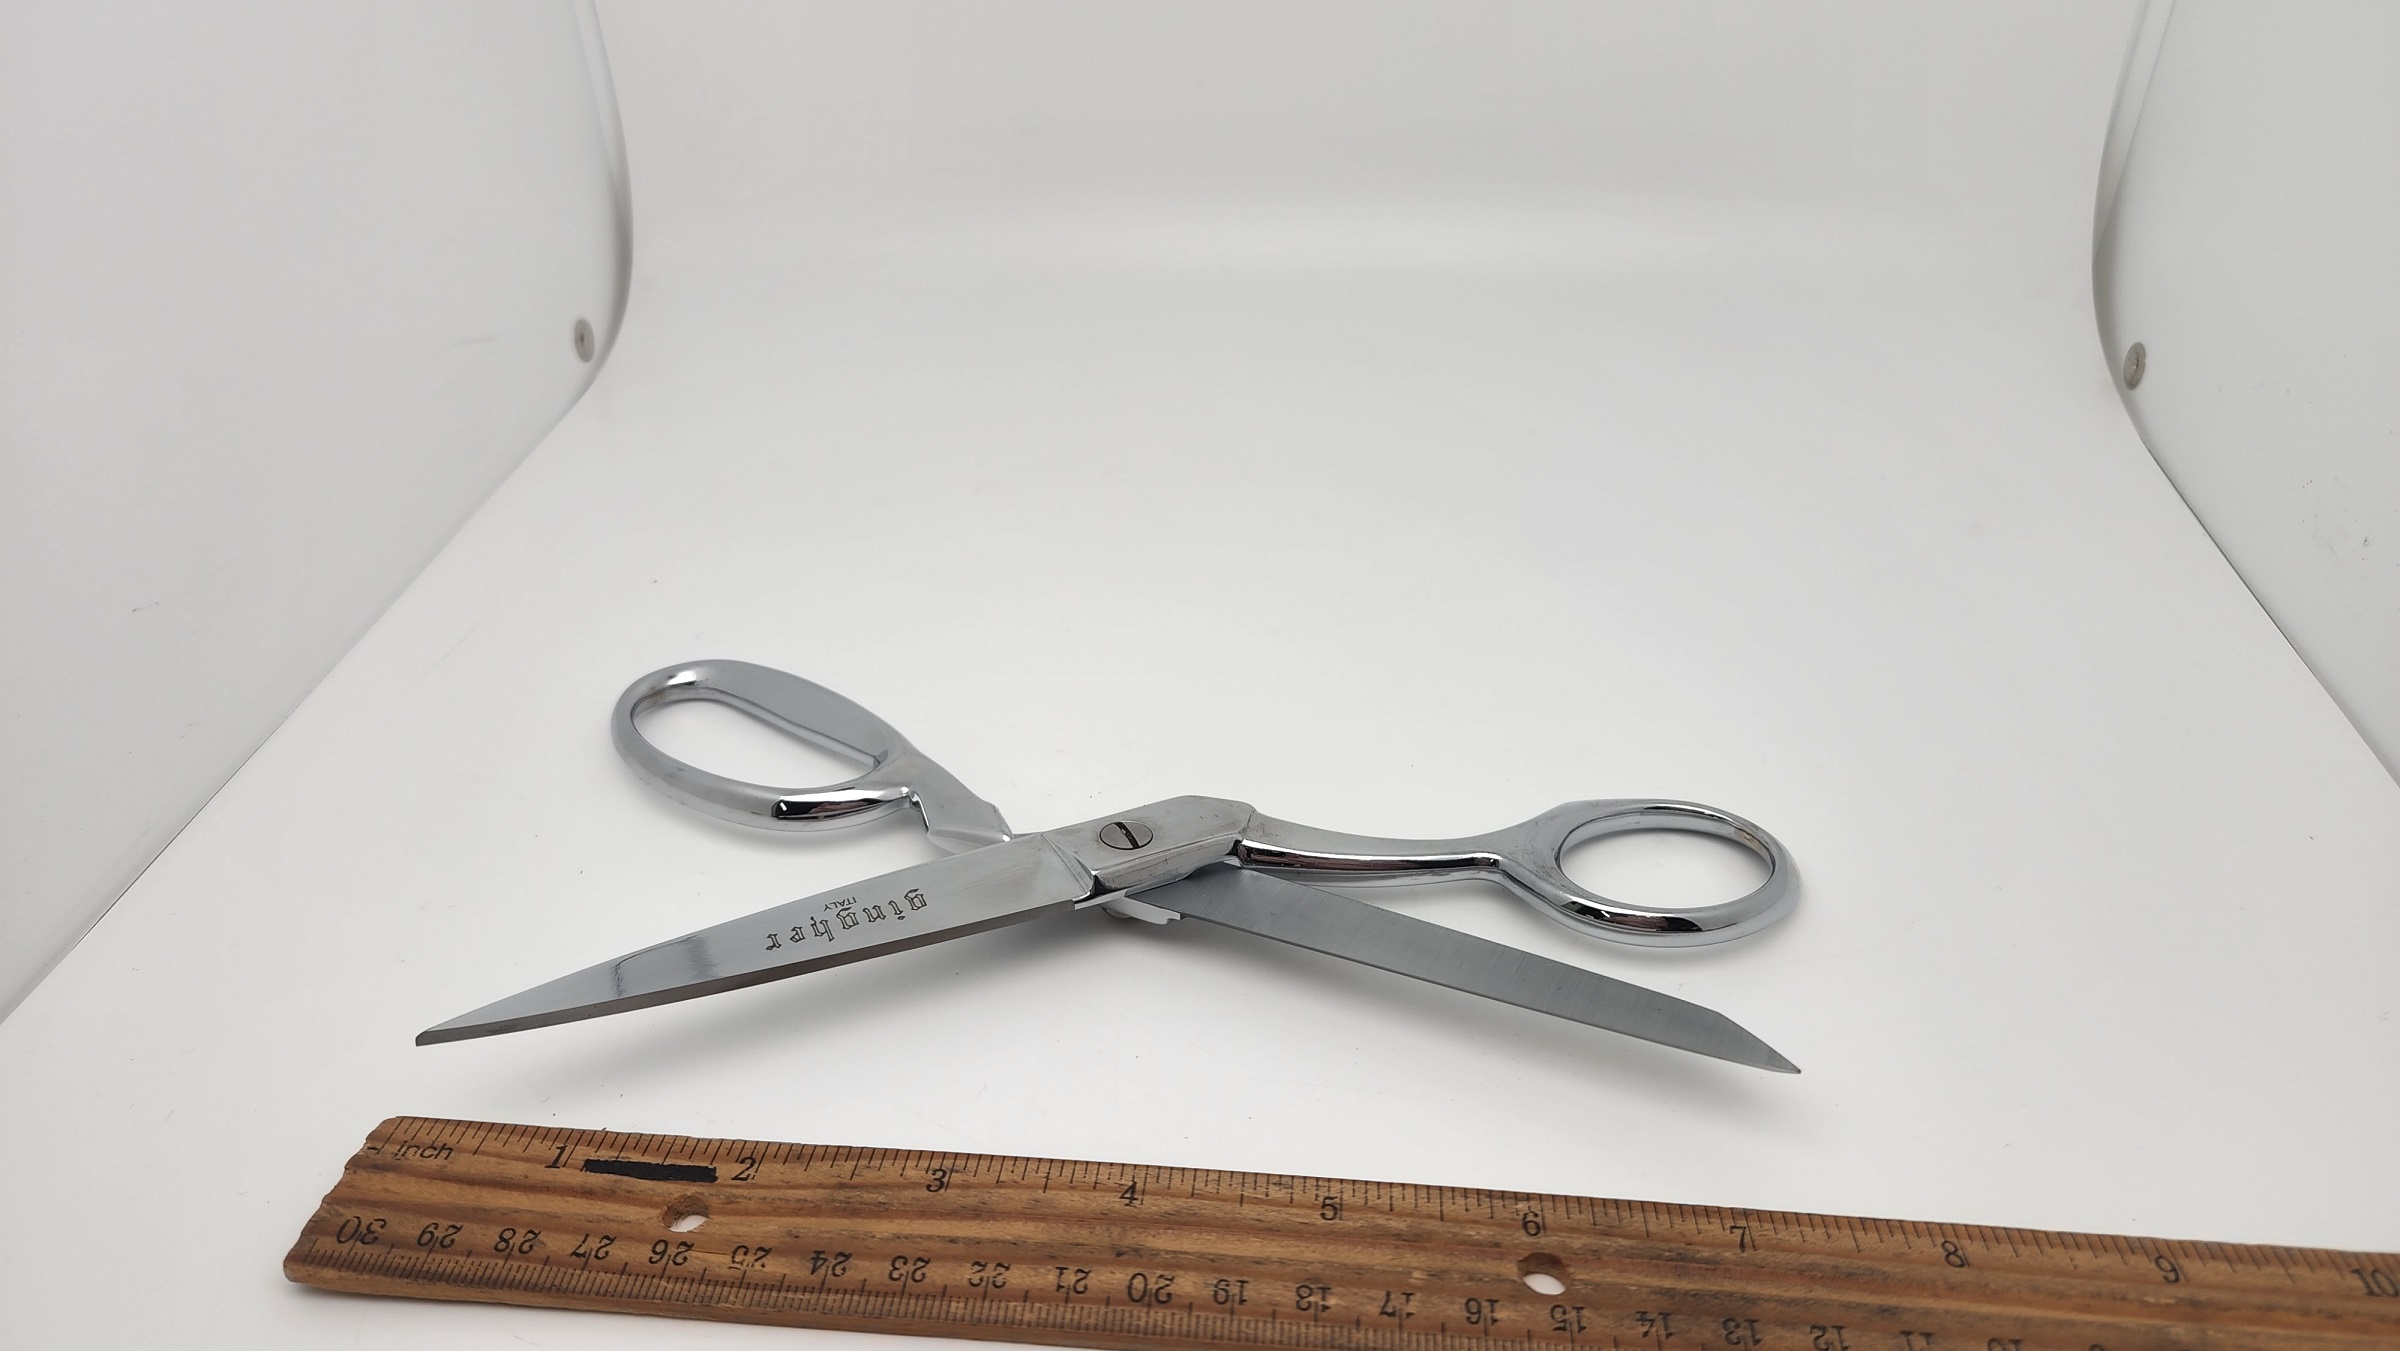 Gingher 220530 - 8 inch Left Hand Knife Edge Dressmakers Shears